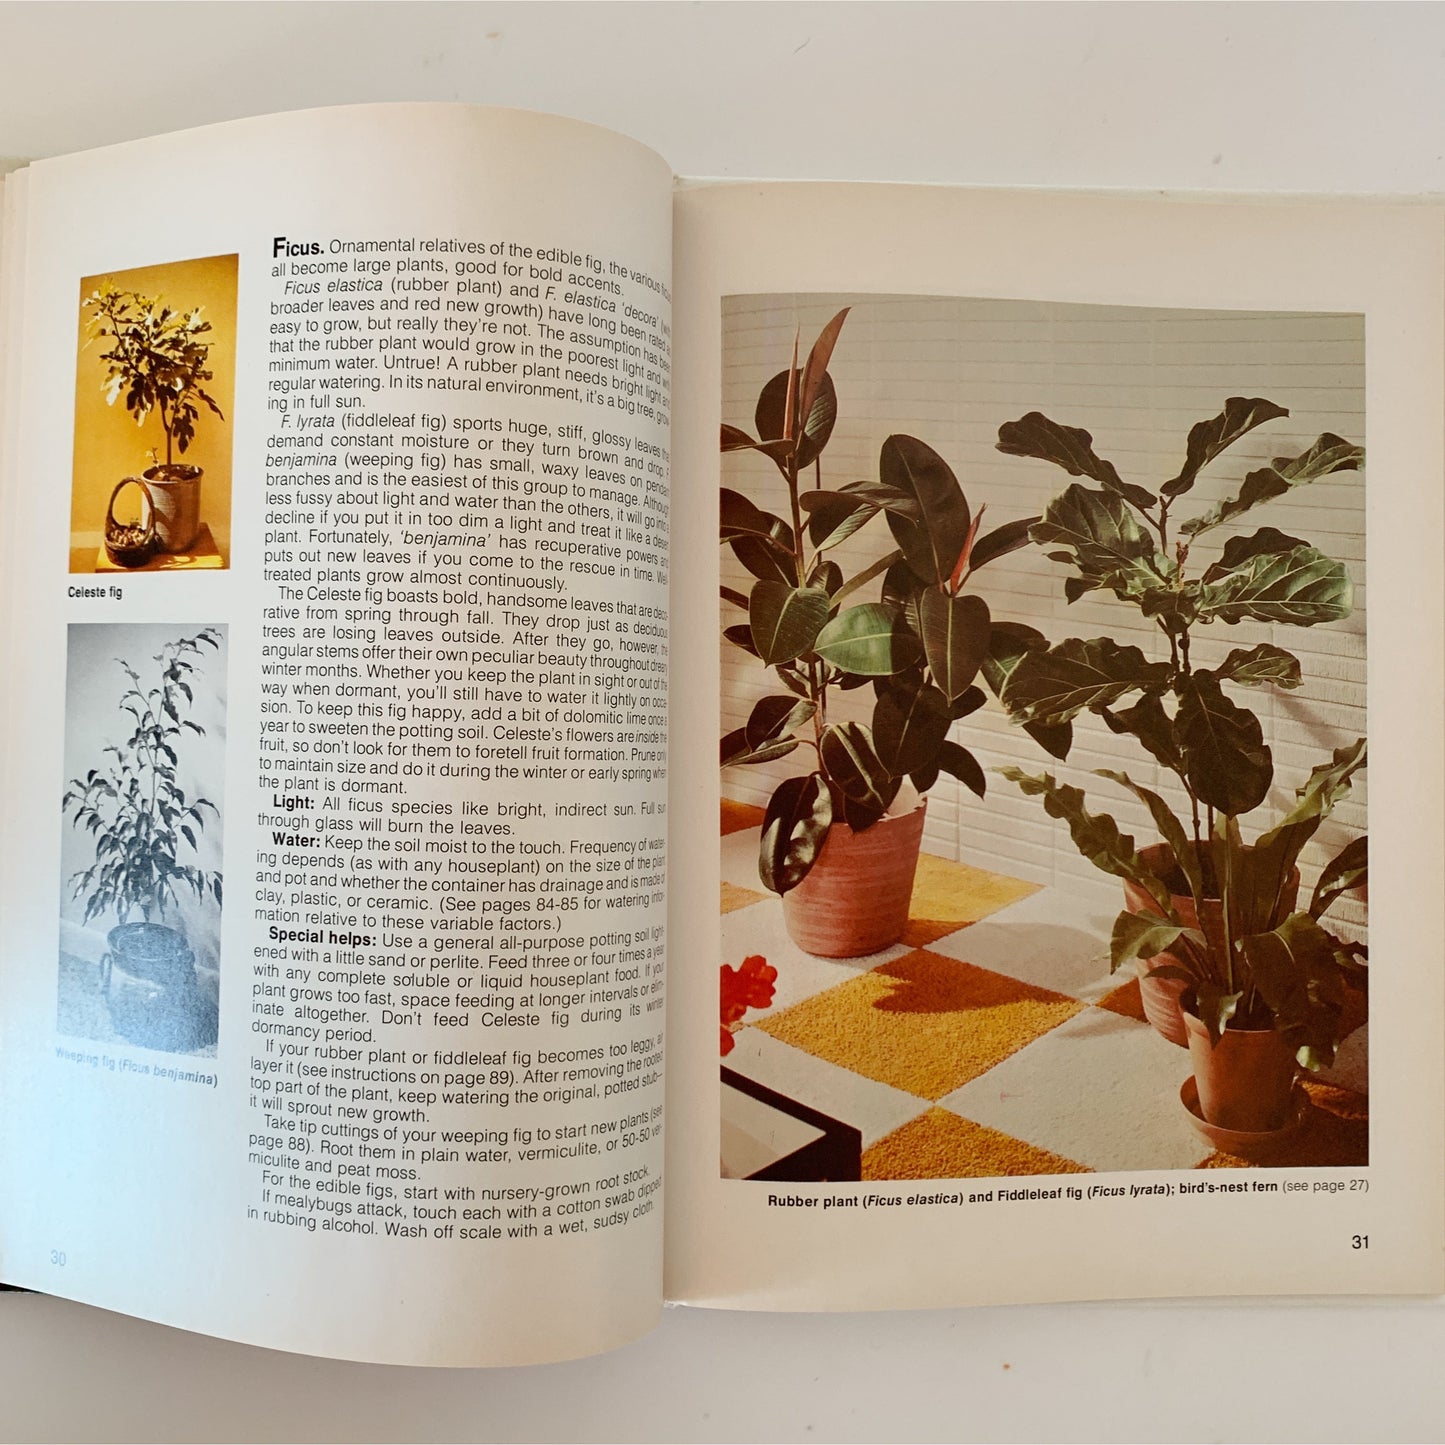 Better Homes and Gardens Favorite Houseplants 1982 Hardcover